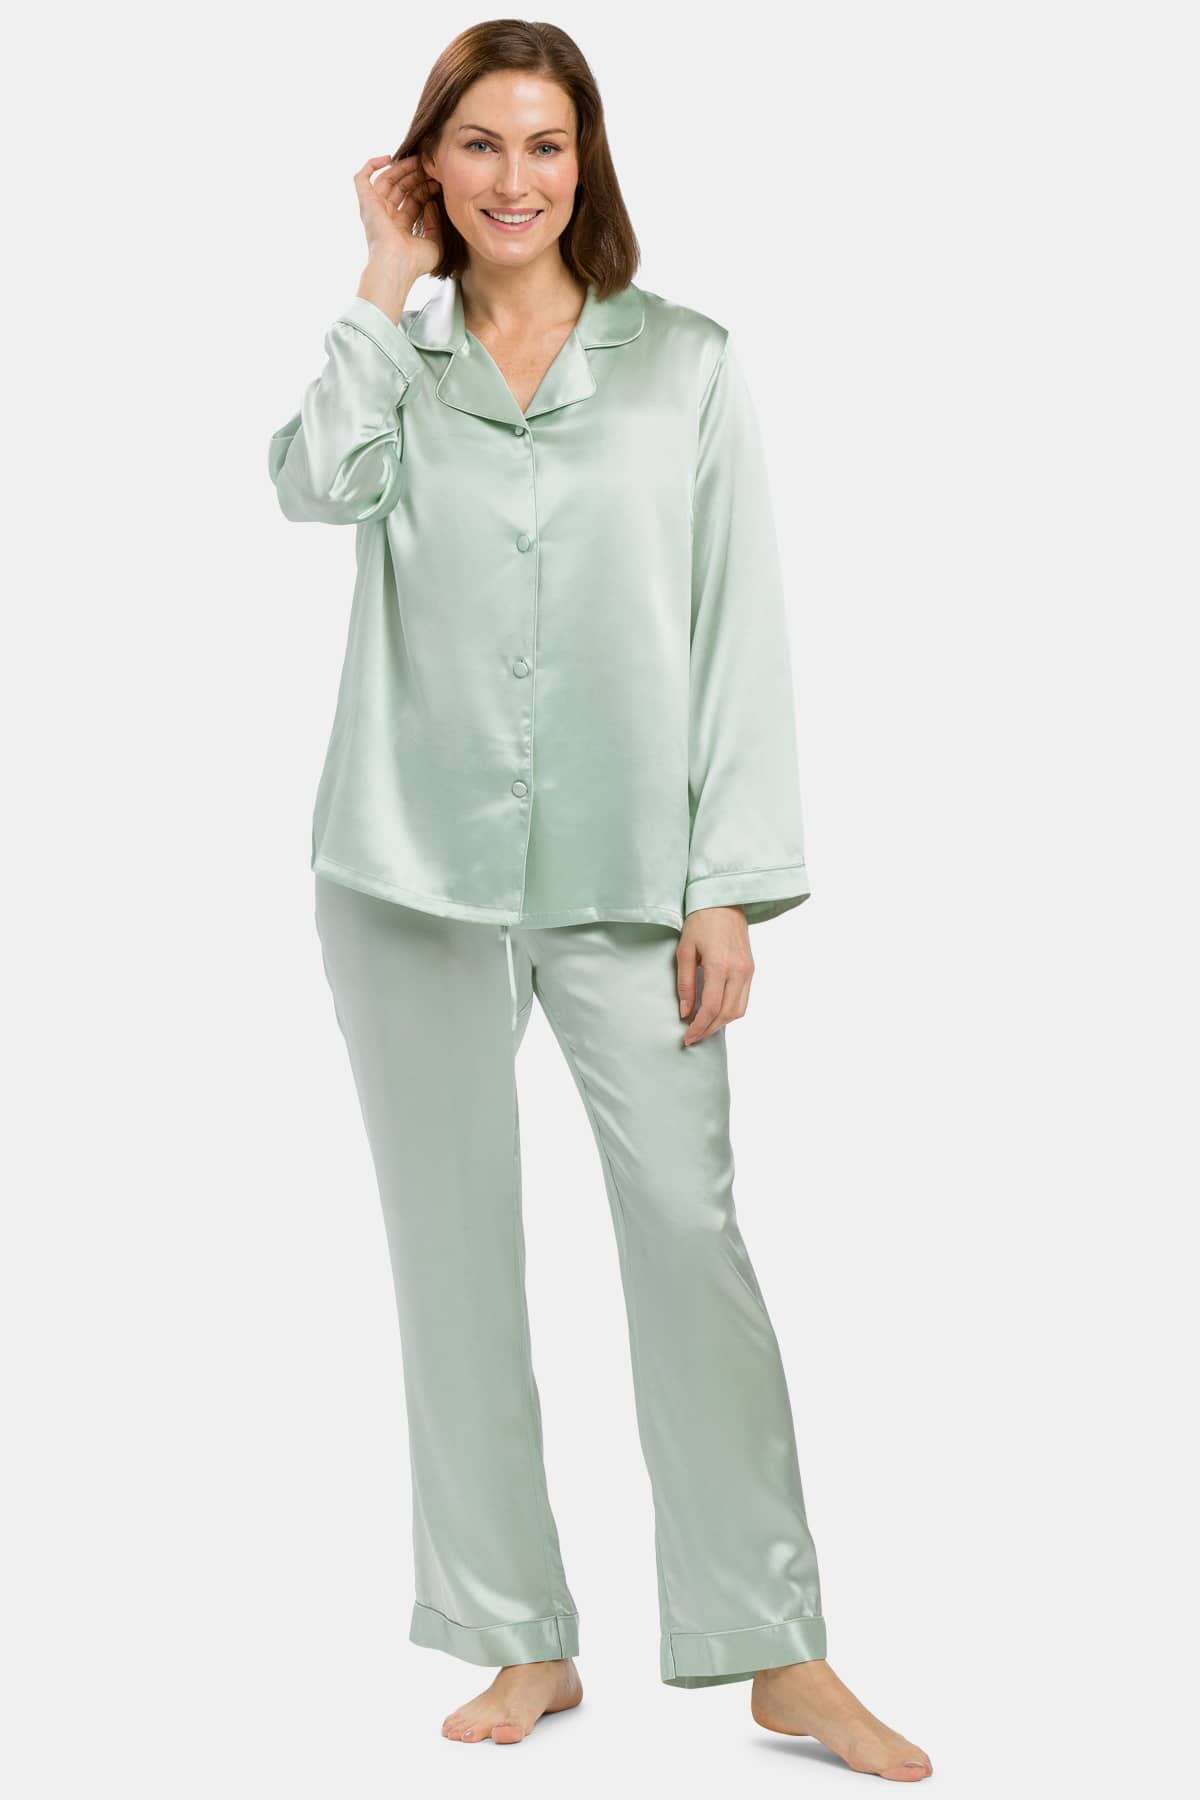 Buy 100 Silk Pajama Set Womens Sleepwear Sets